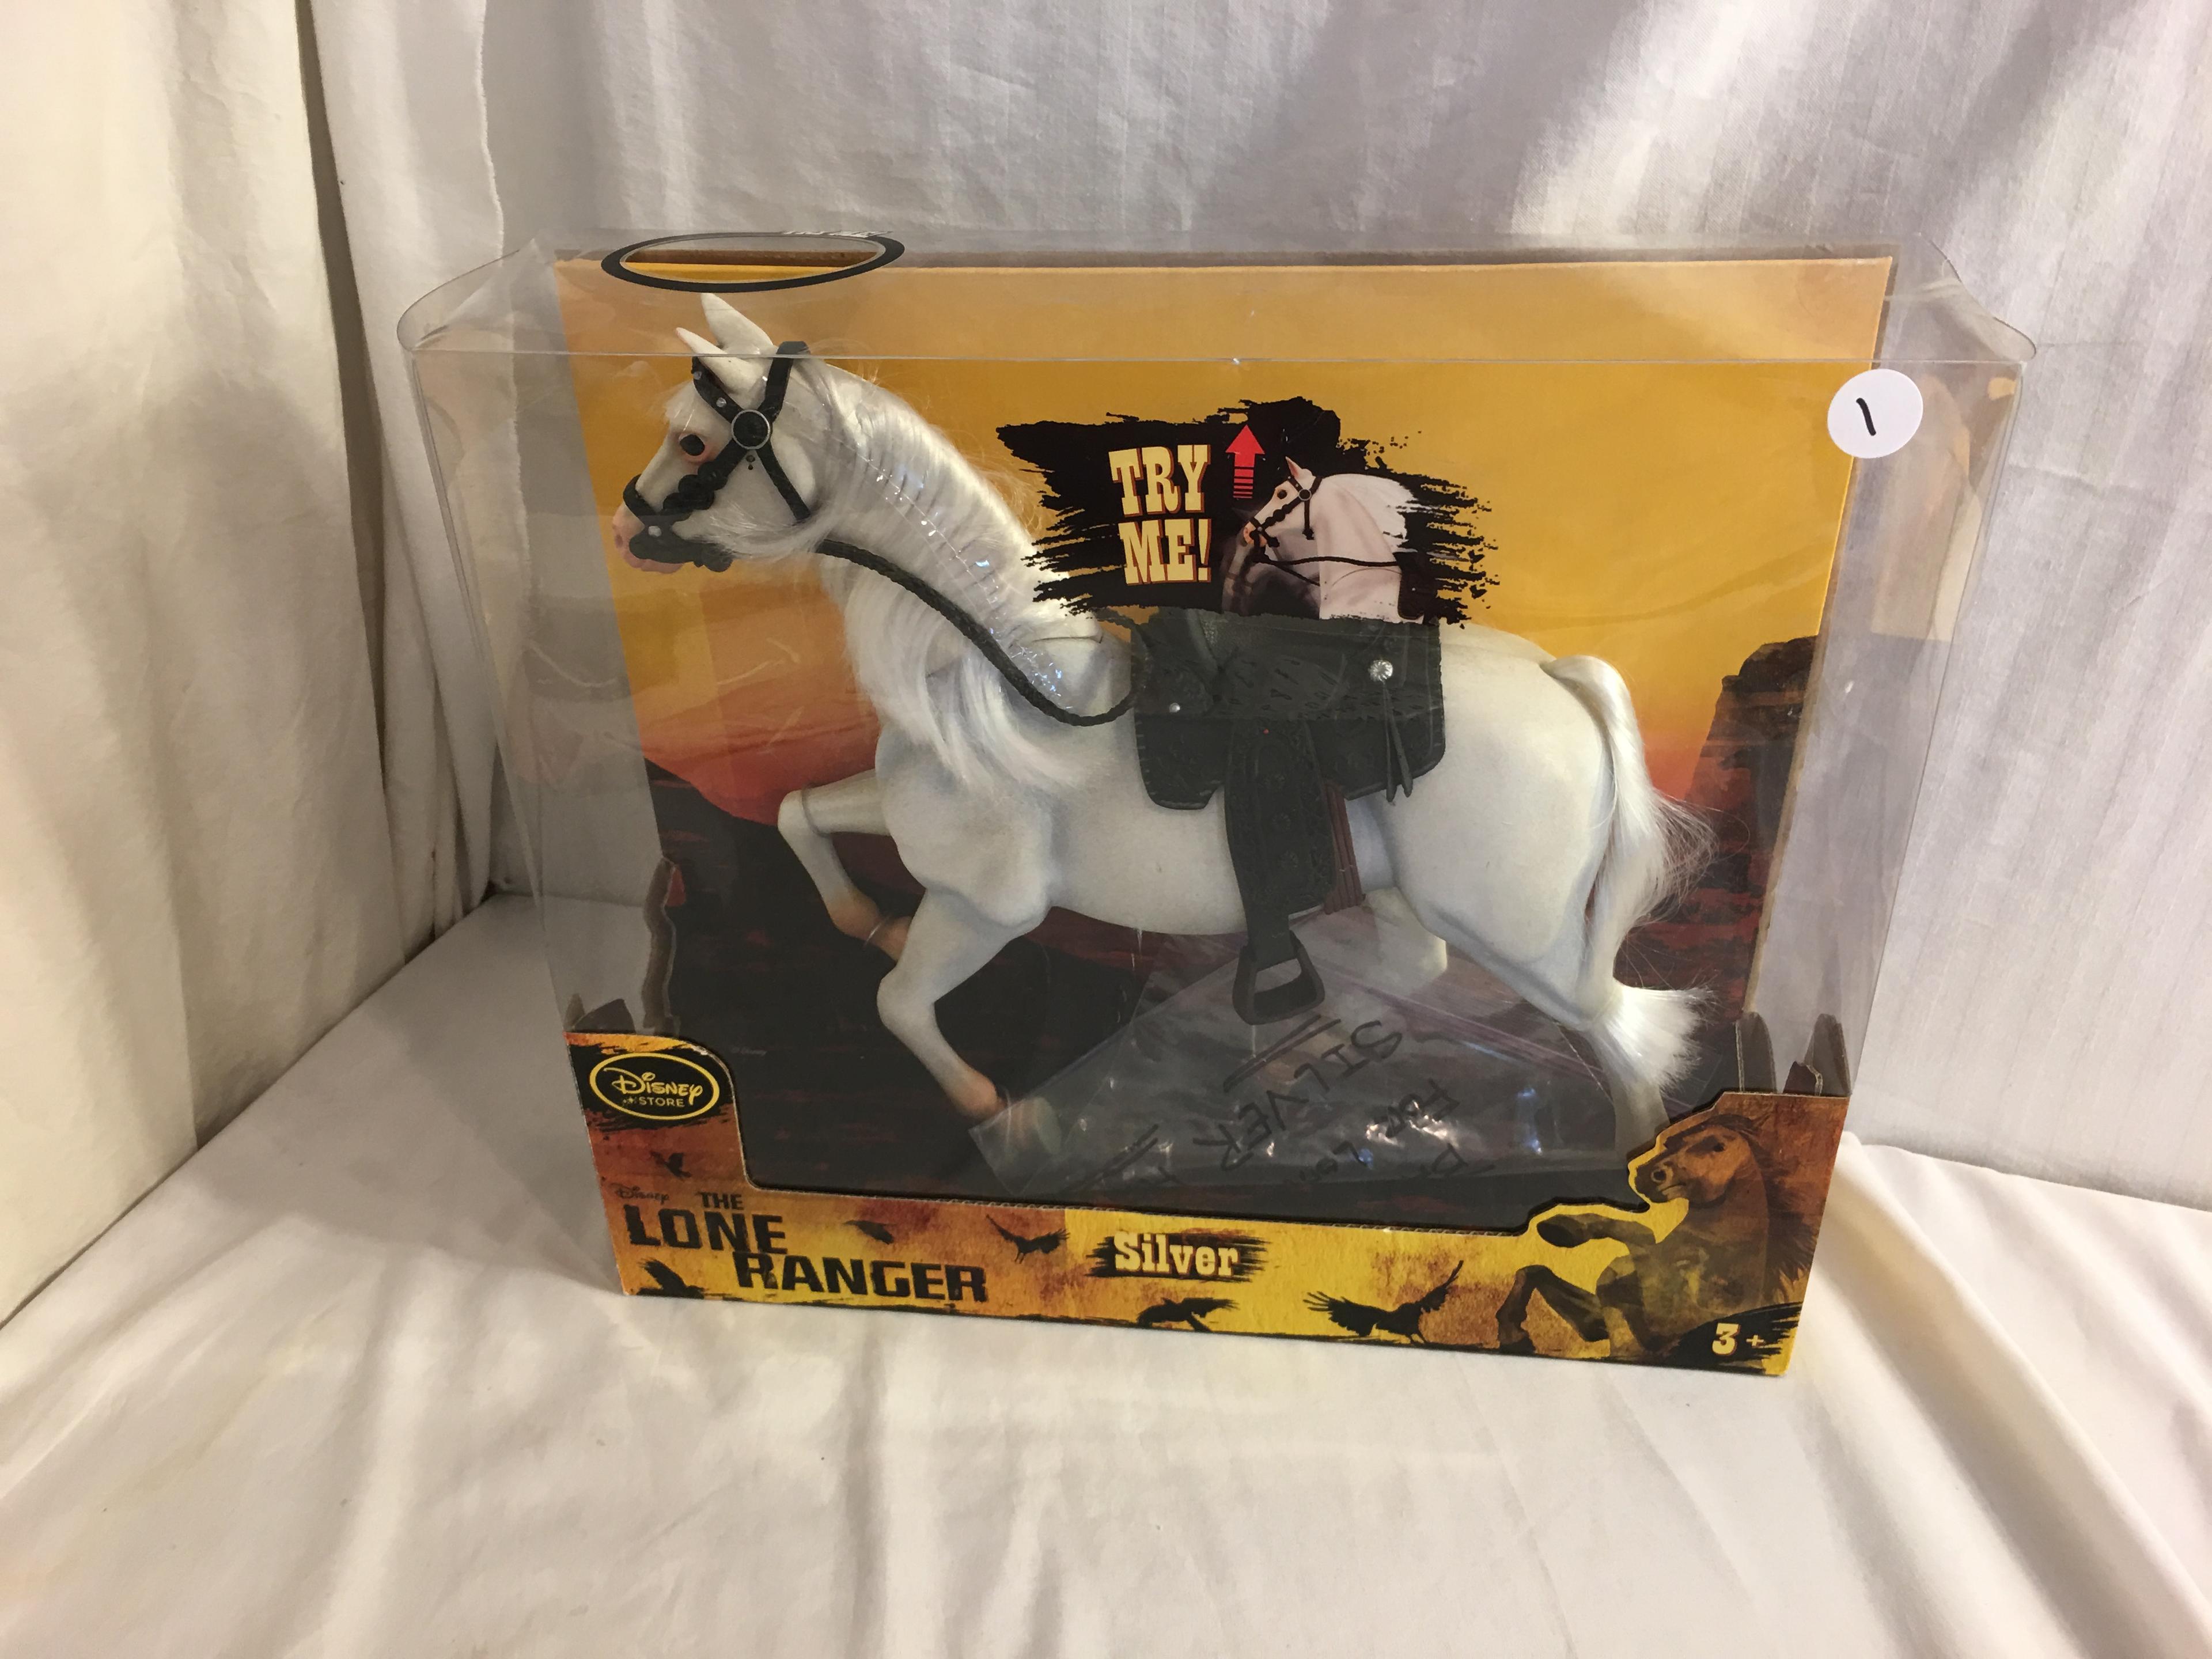 NIB Collector Disney Store The Lone Ranger Silver Horse Action Figure Box: 14"x12"